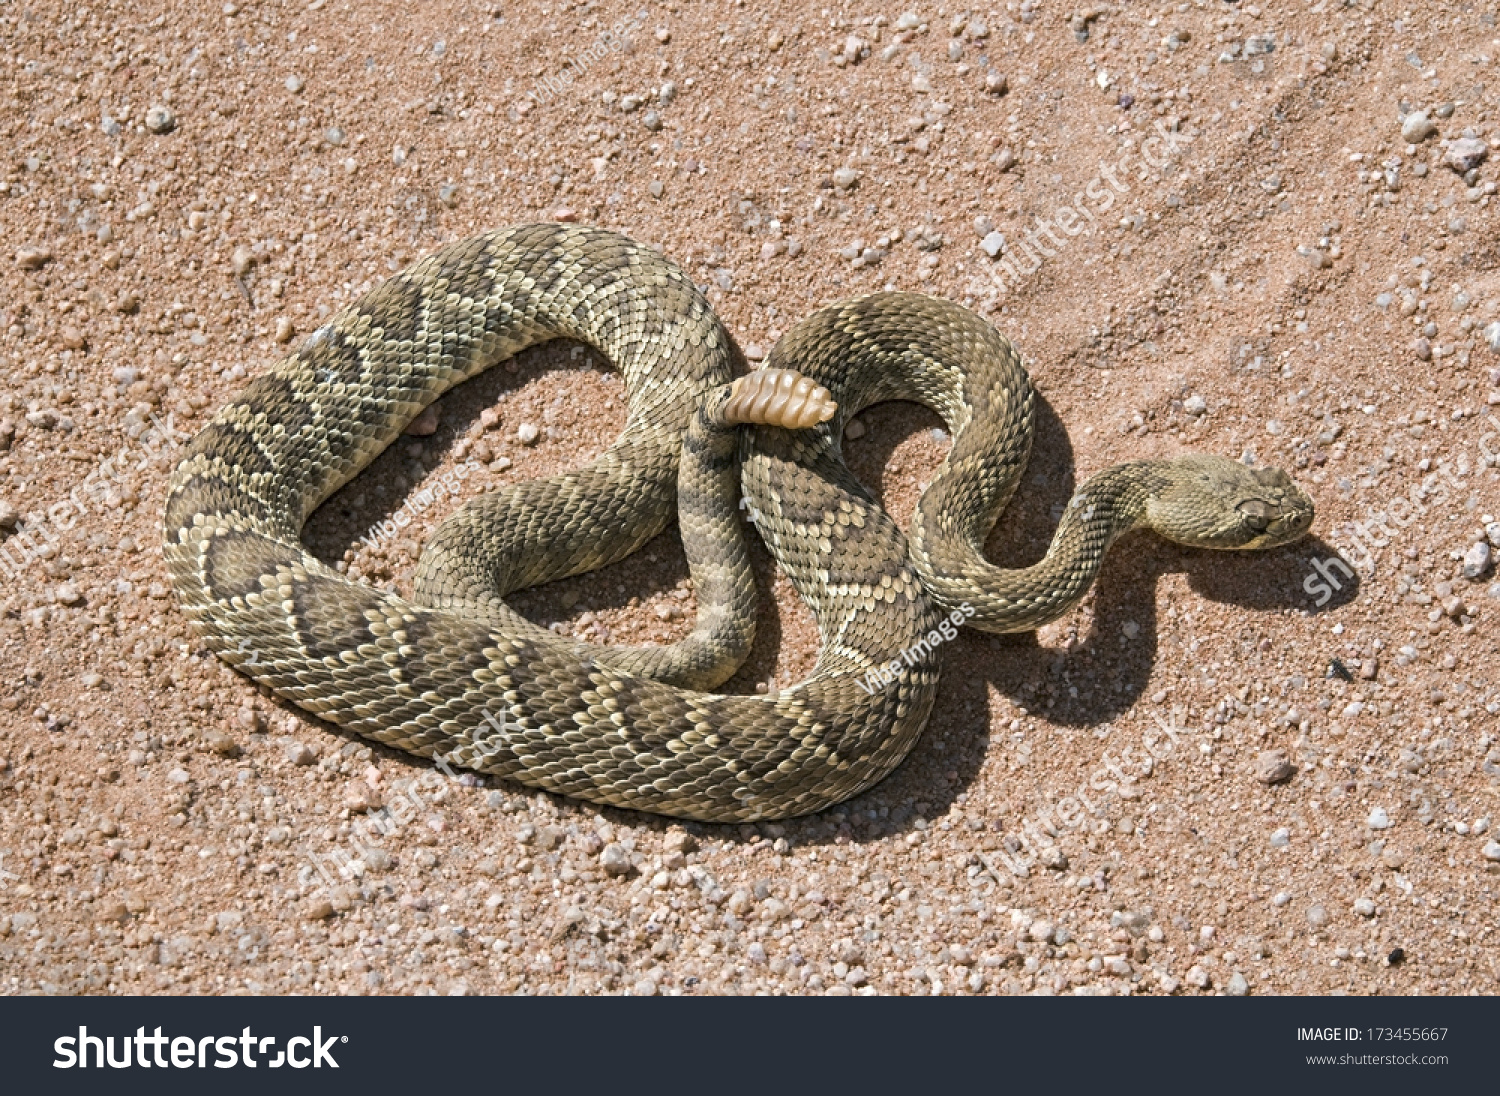 A Mojave Green Rattlesnake (Crotalus Scutulatus); Mojave Desert, California, Usa #173455667